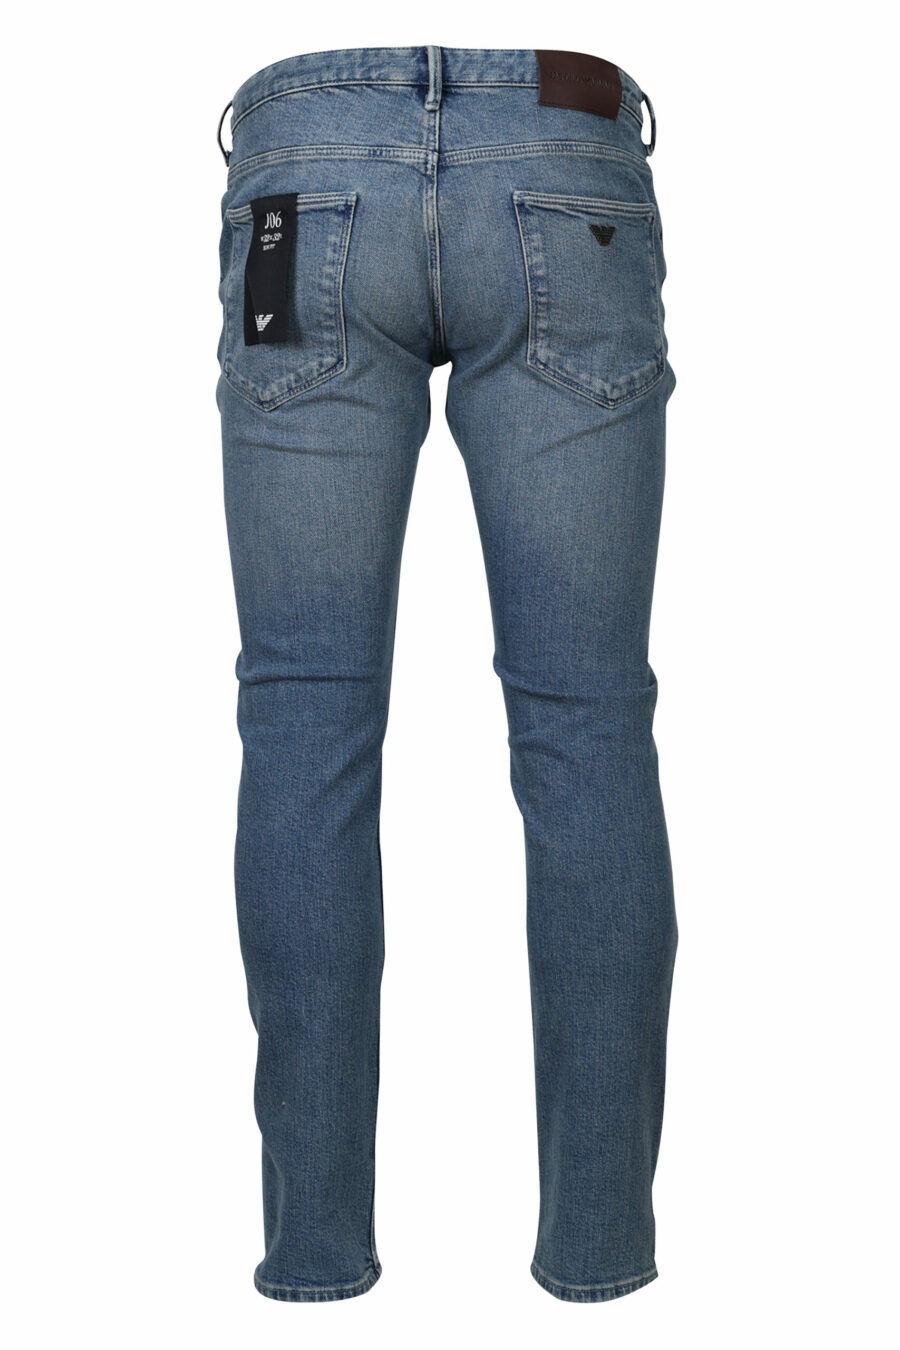 Hellblaue Jeans mit Metalladler - 8057767427009 3 skaliert